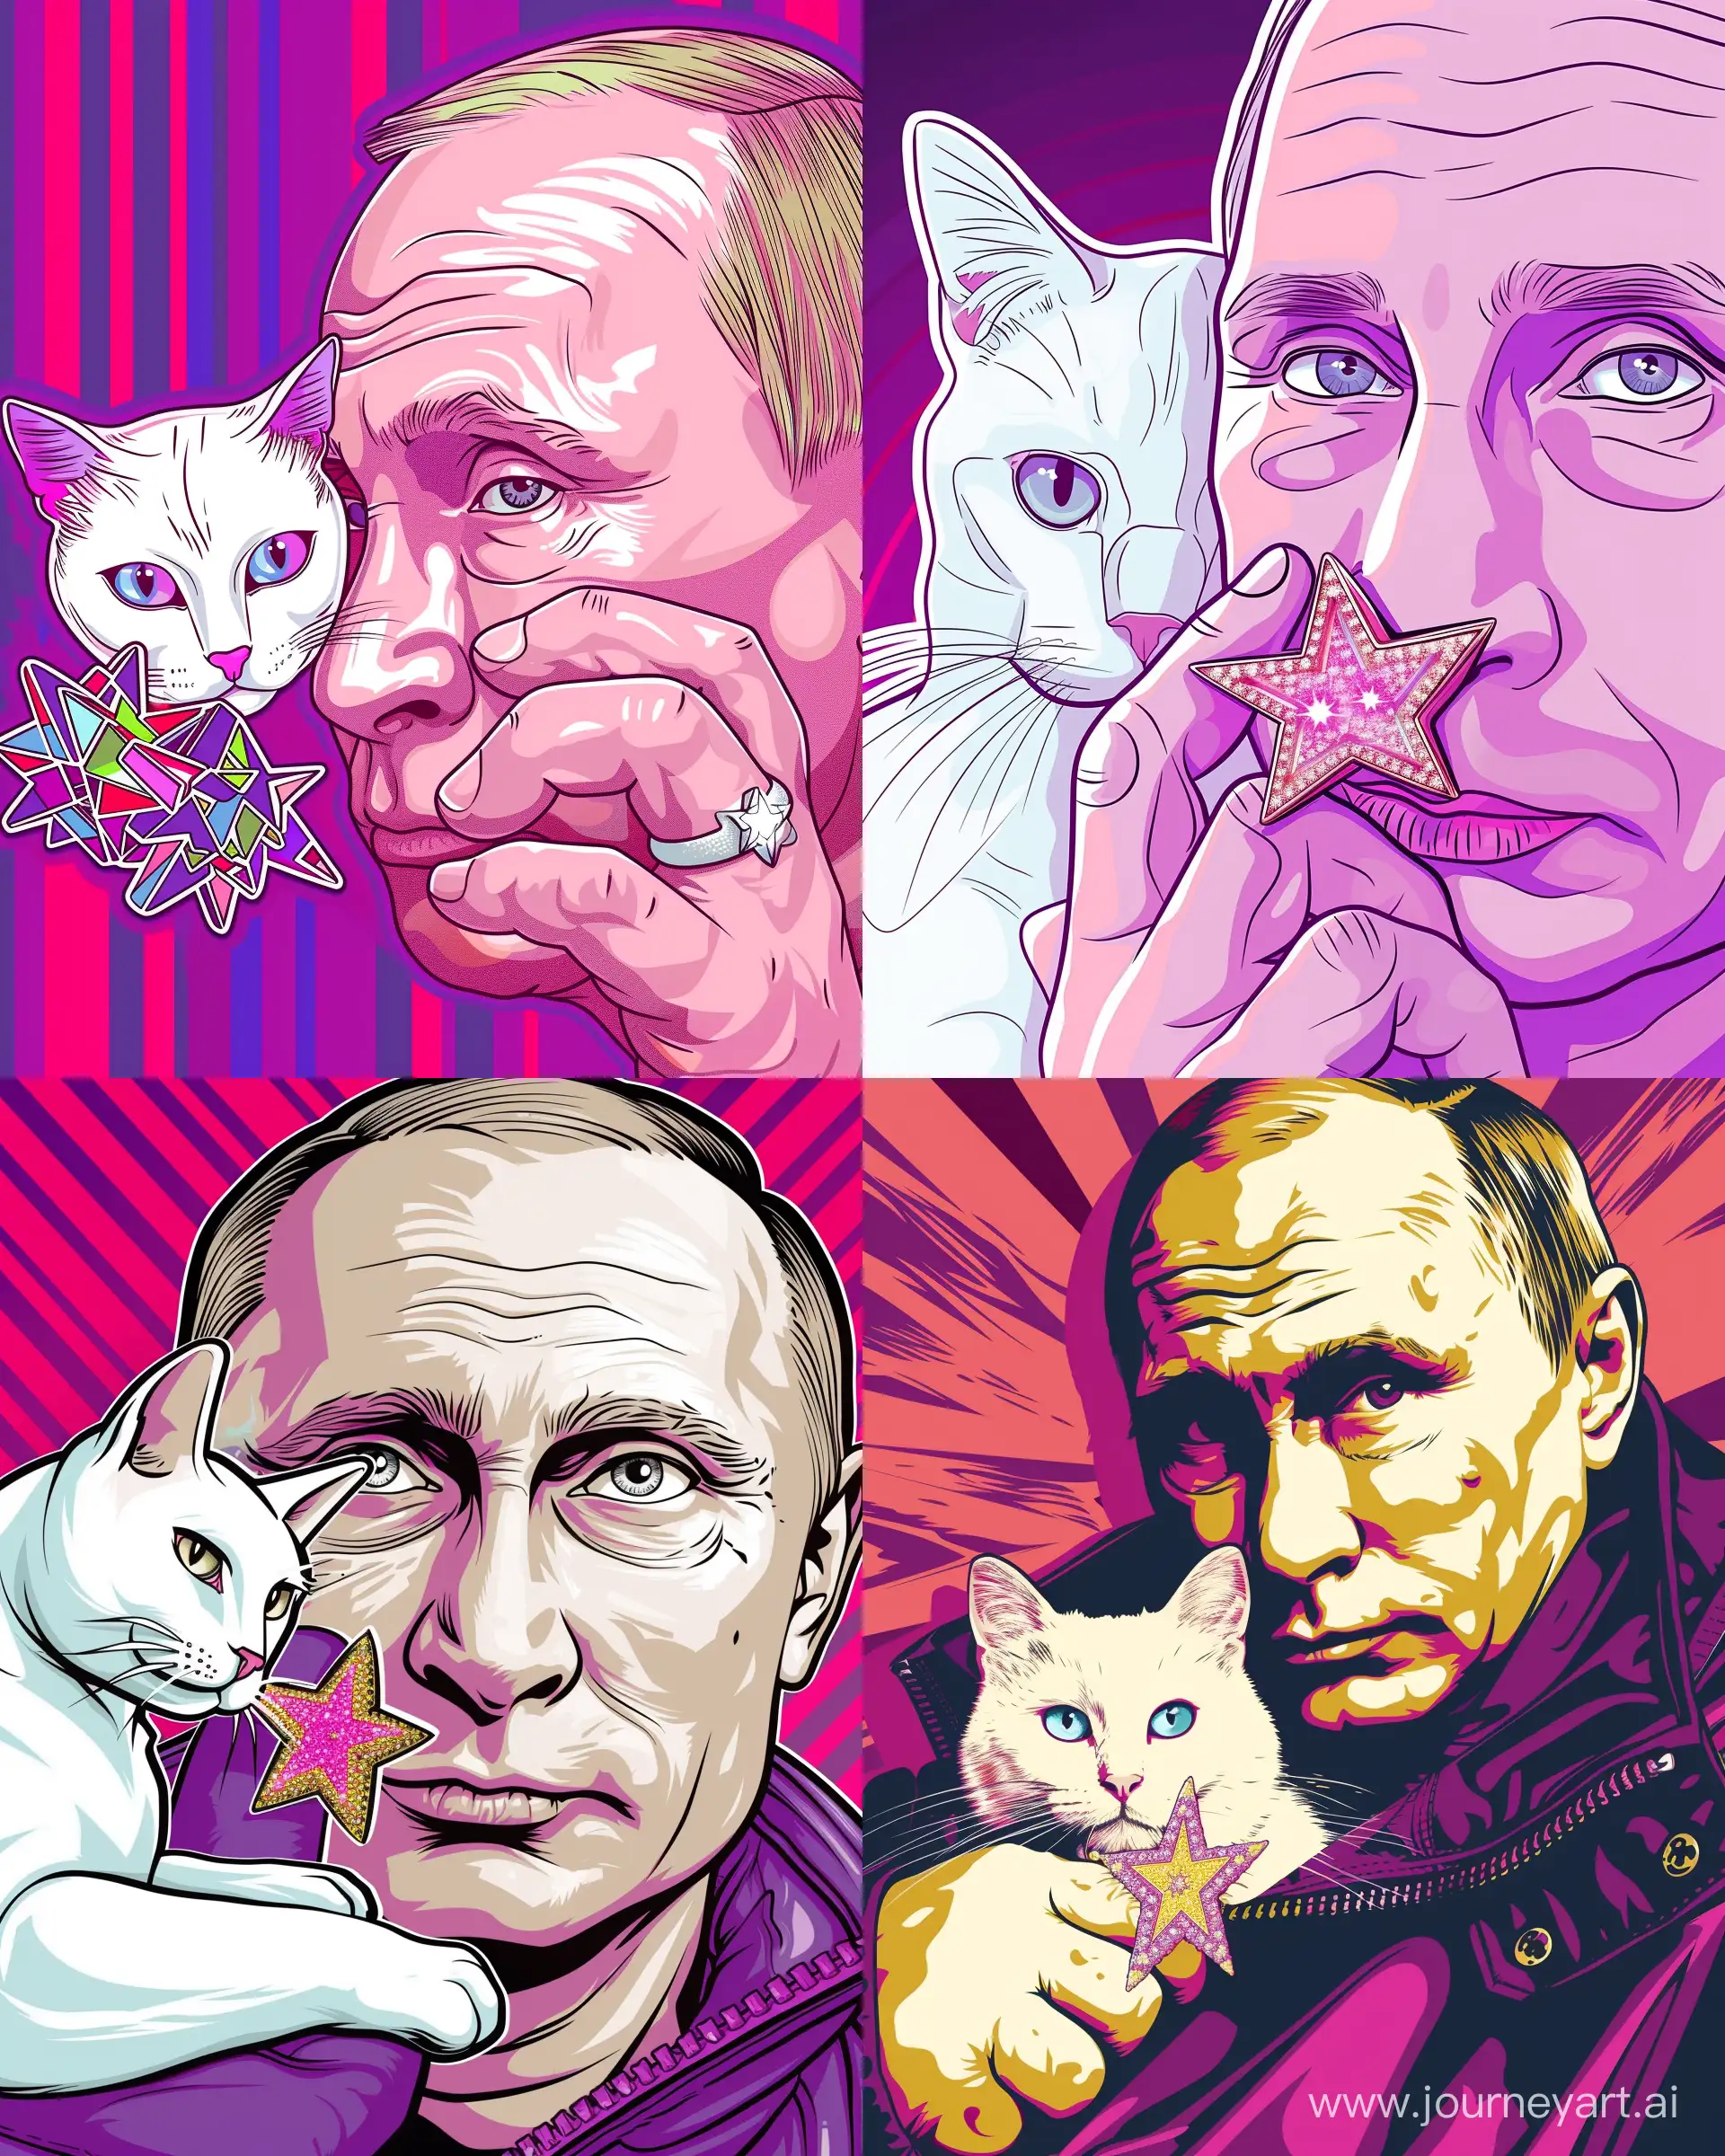 Adorable-Vladimir-Putin-Style-White-Cat-with-Kirakira-Star-Ring